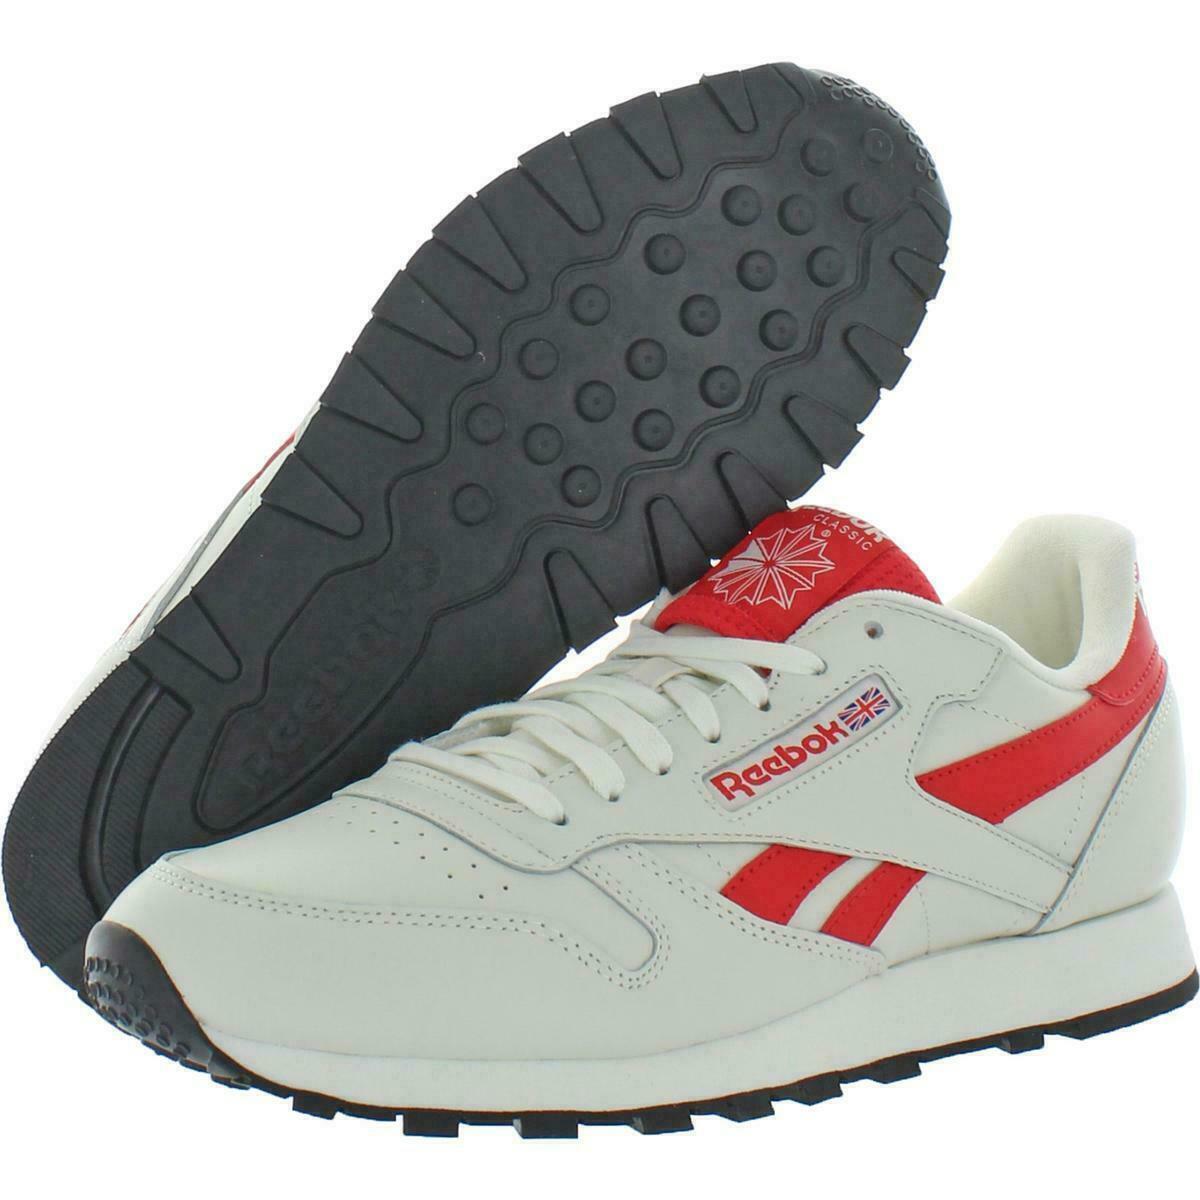 Reebok Classic Leather MU Men`s Running Training Shoes Chalk/rad Red EF3383 - Chalk/Rad Red